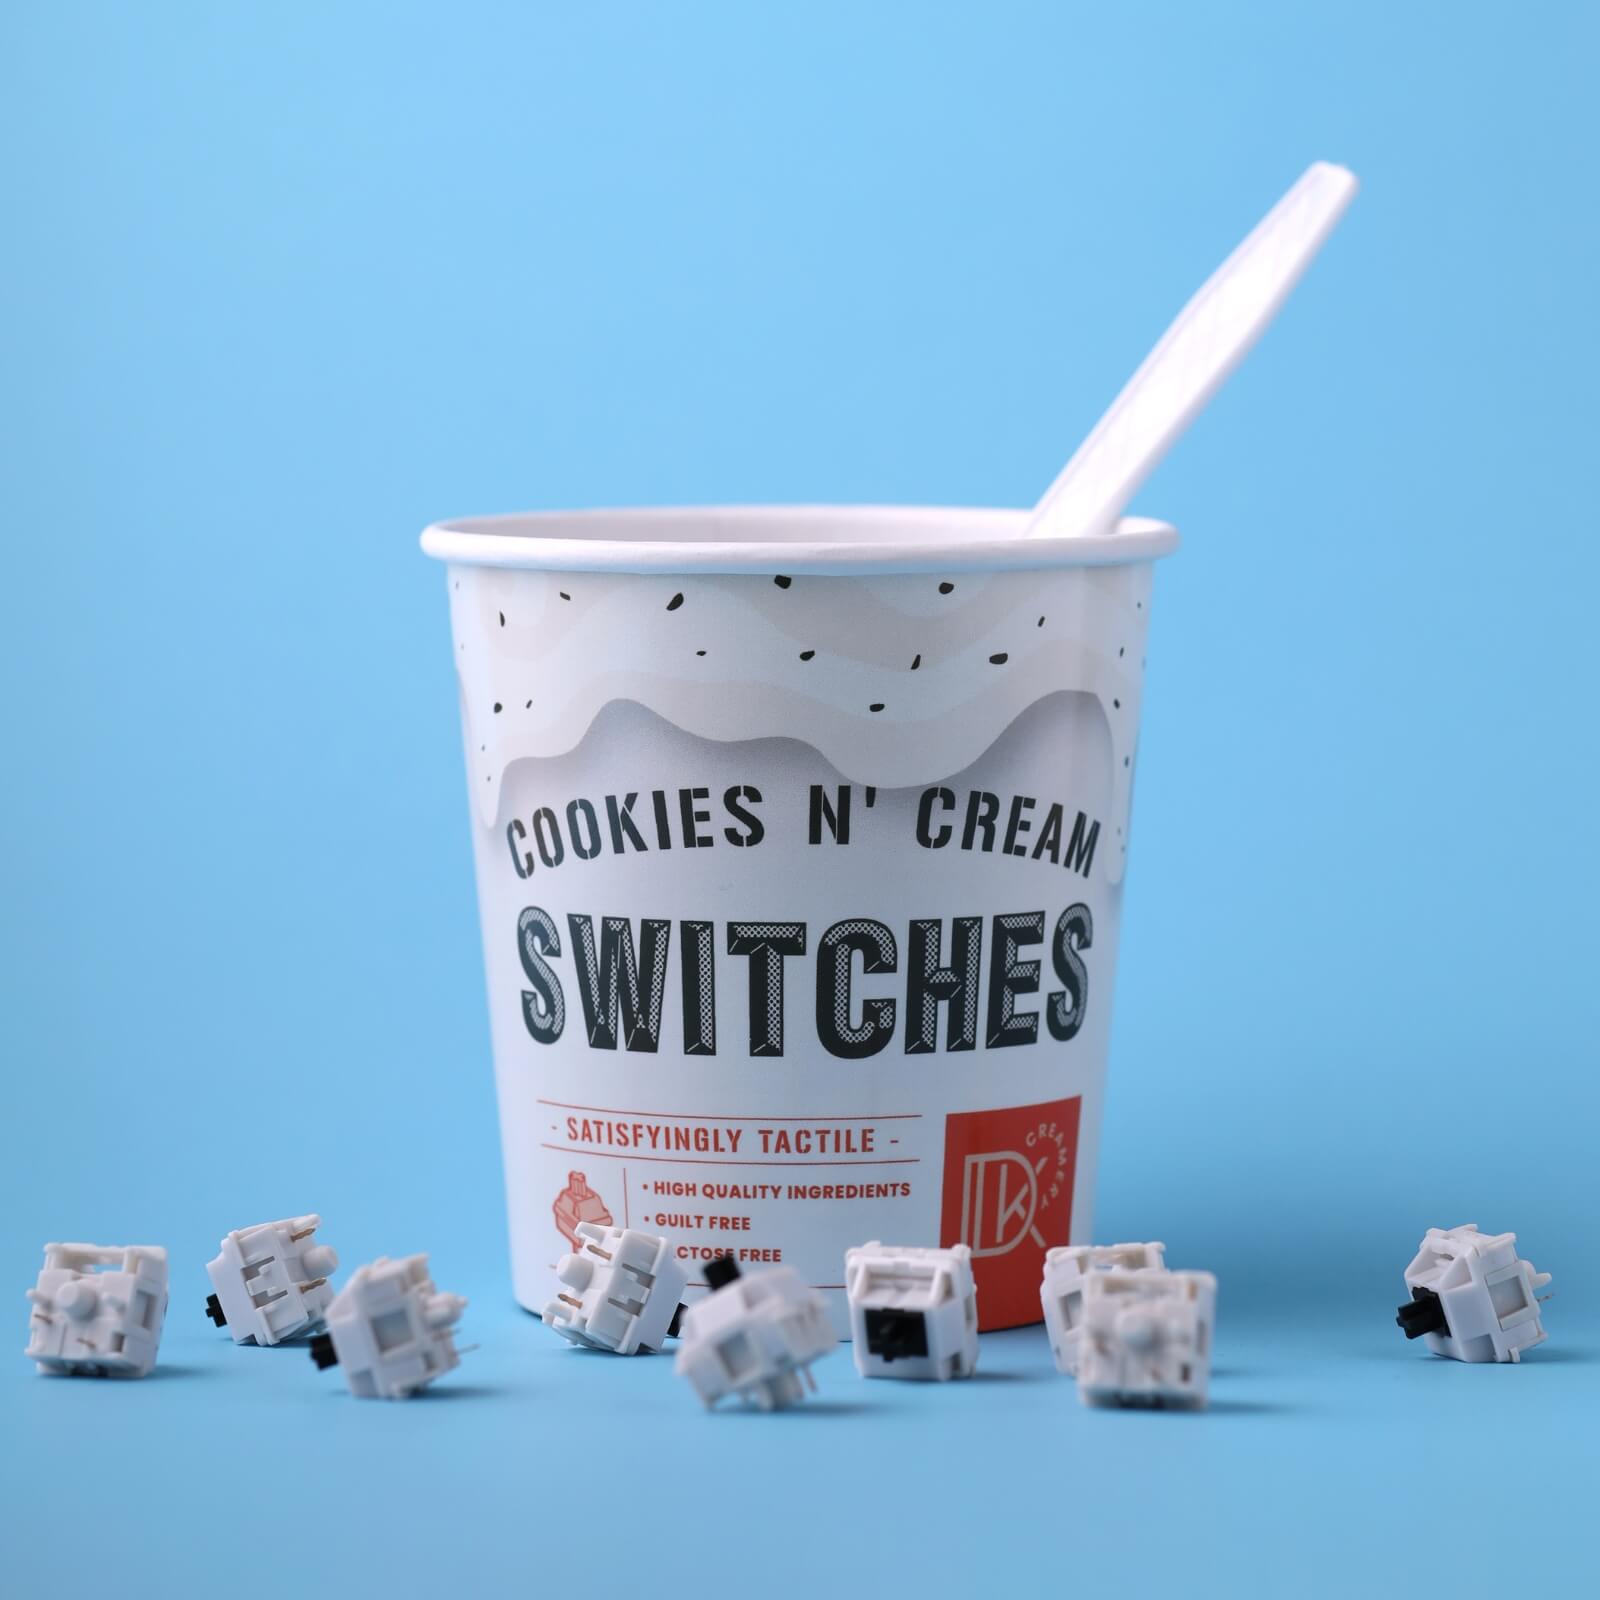 DK Creamery - Cookies n’ Cream Switches